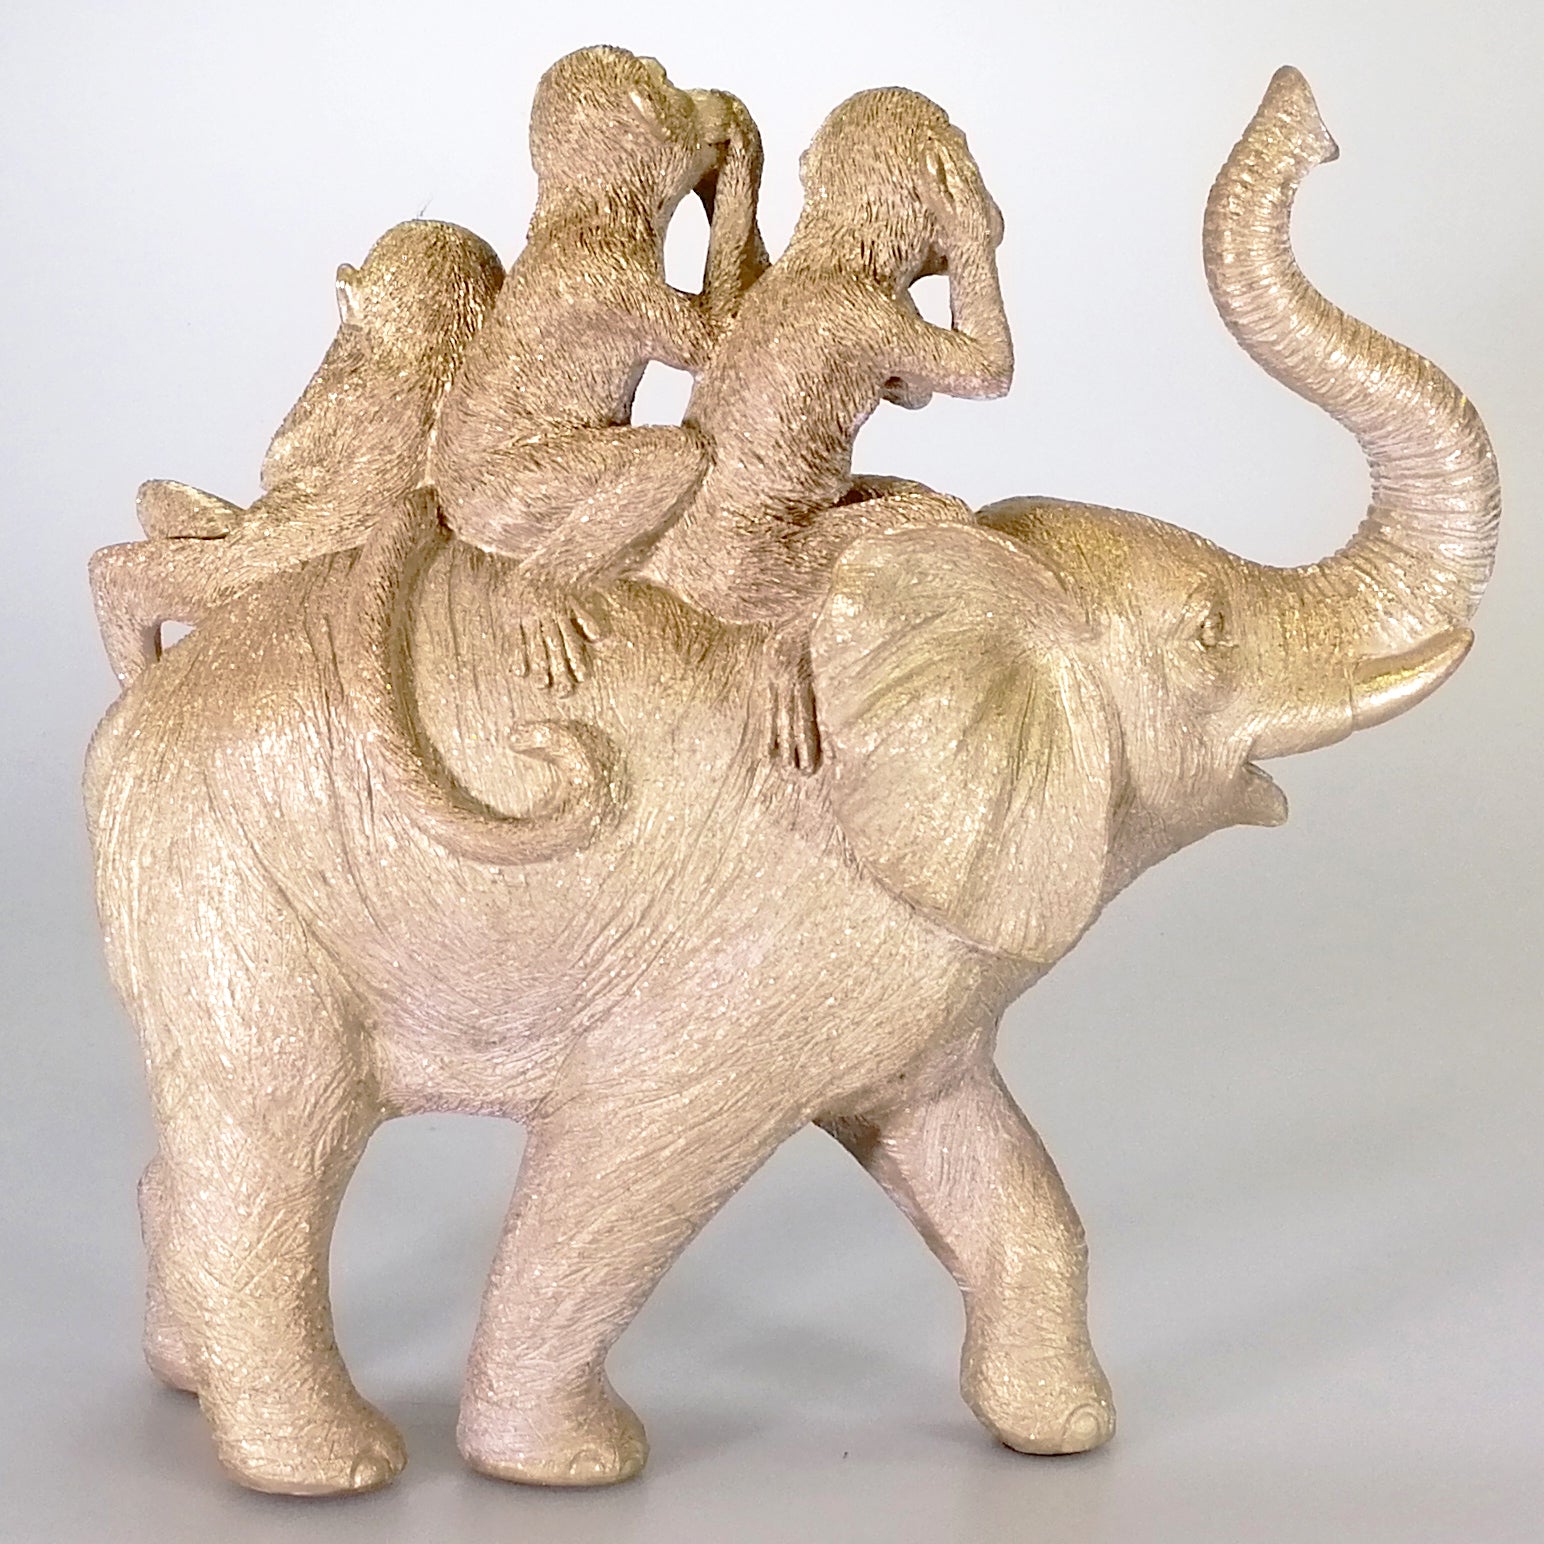 Painted Gold Elephant With monkeys